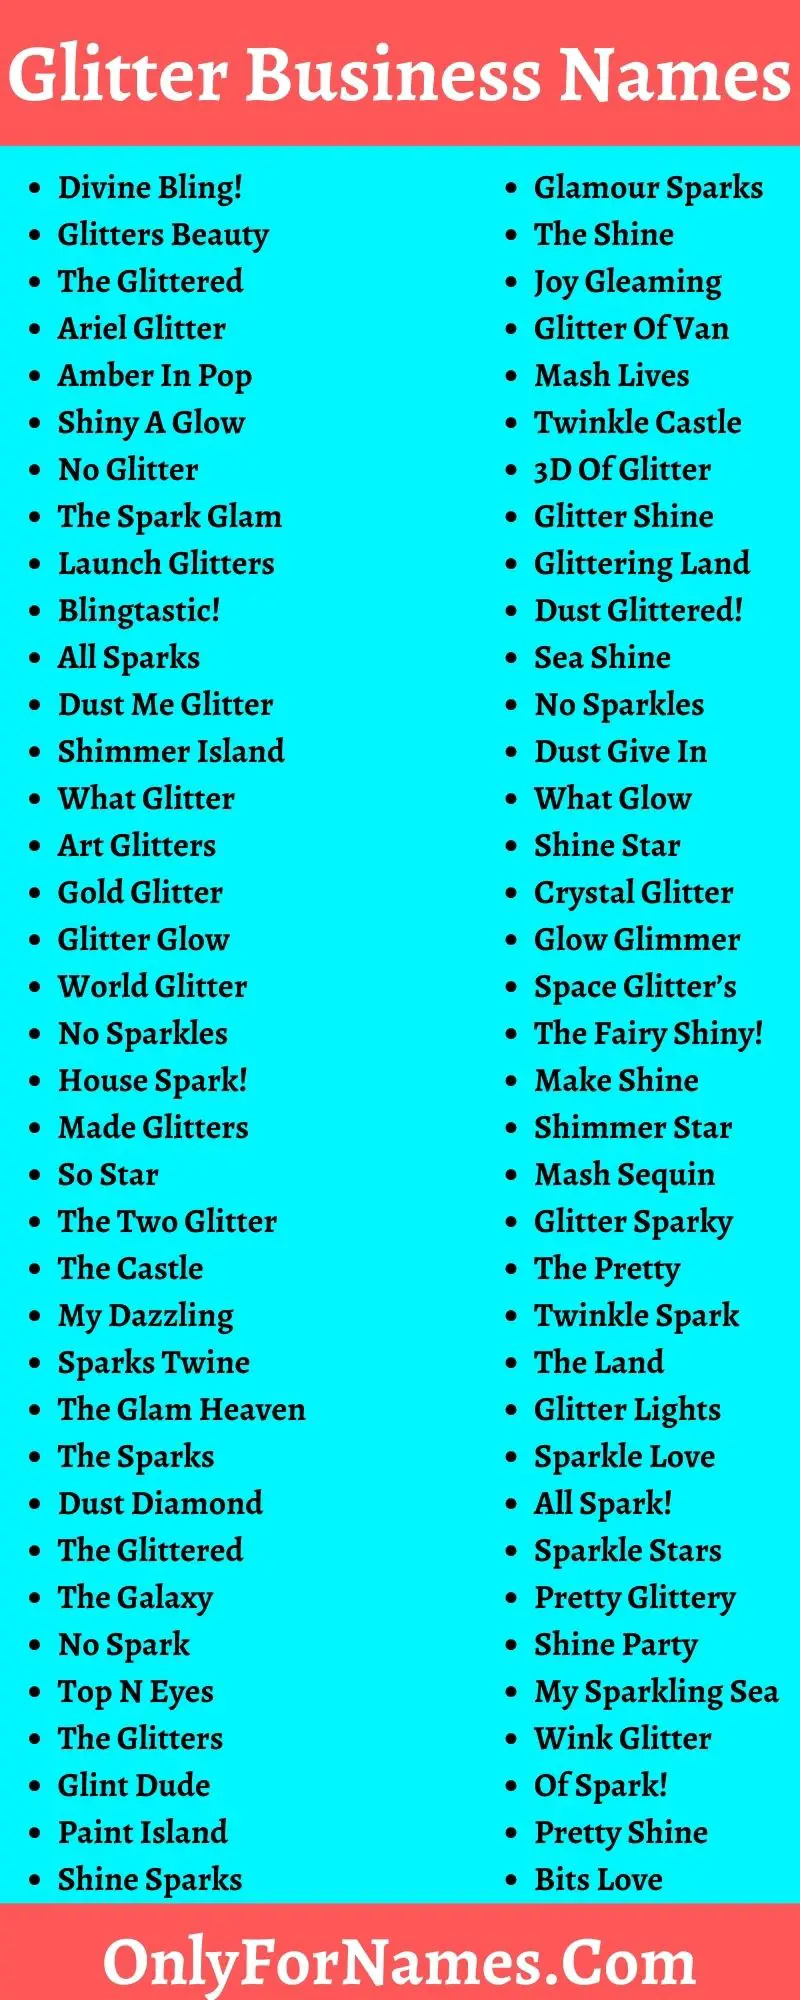 Glitter Business Names